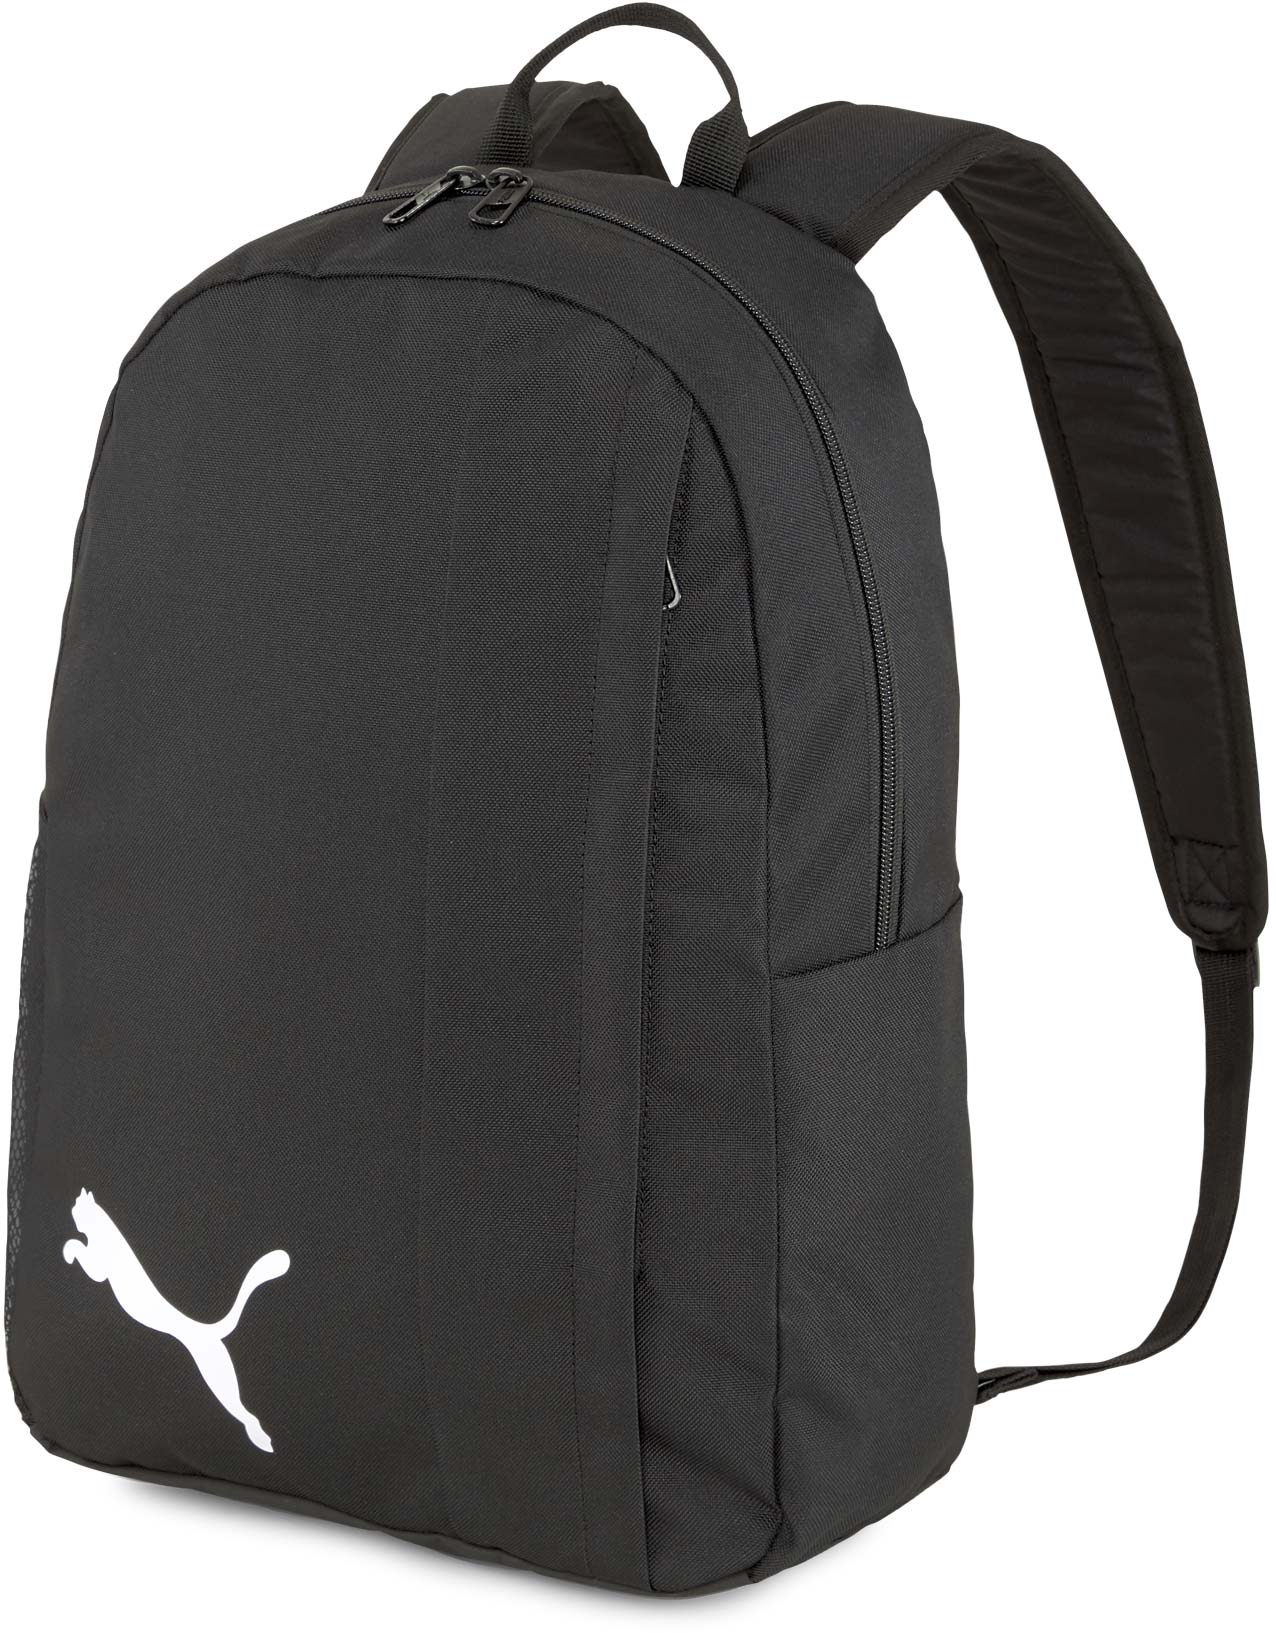 Sports backpack